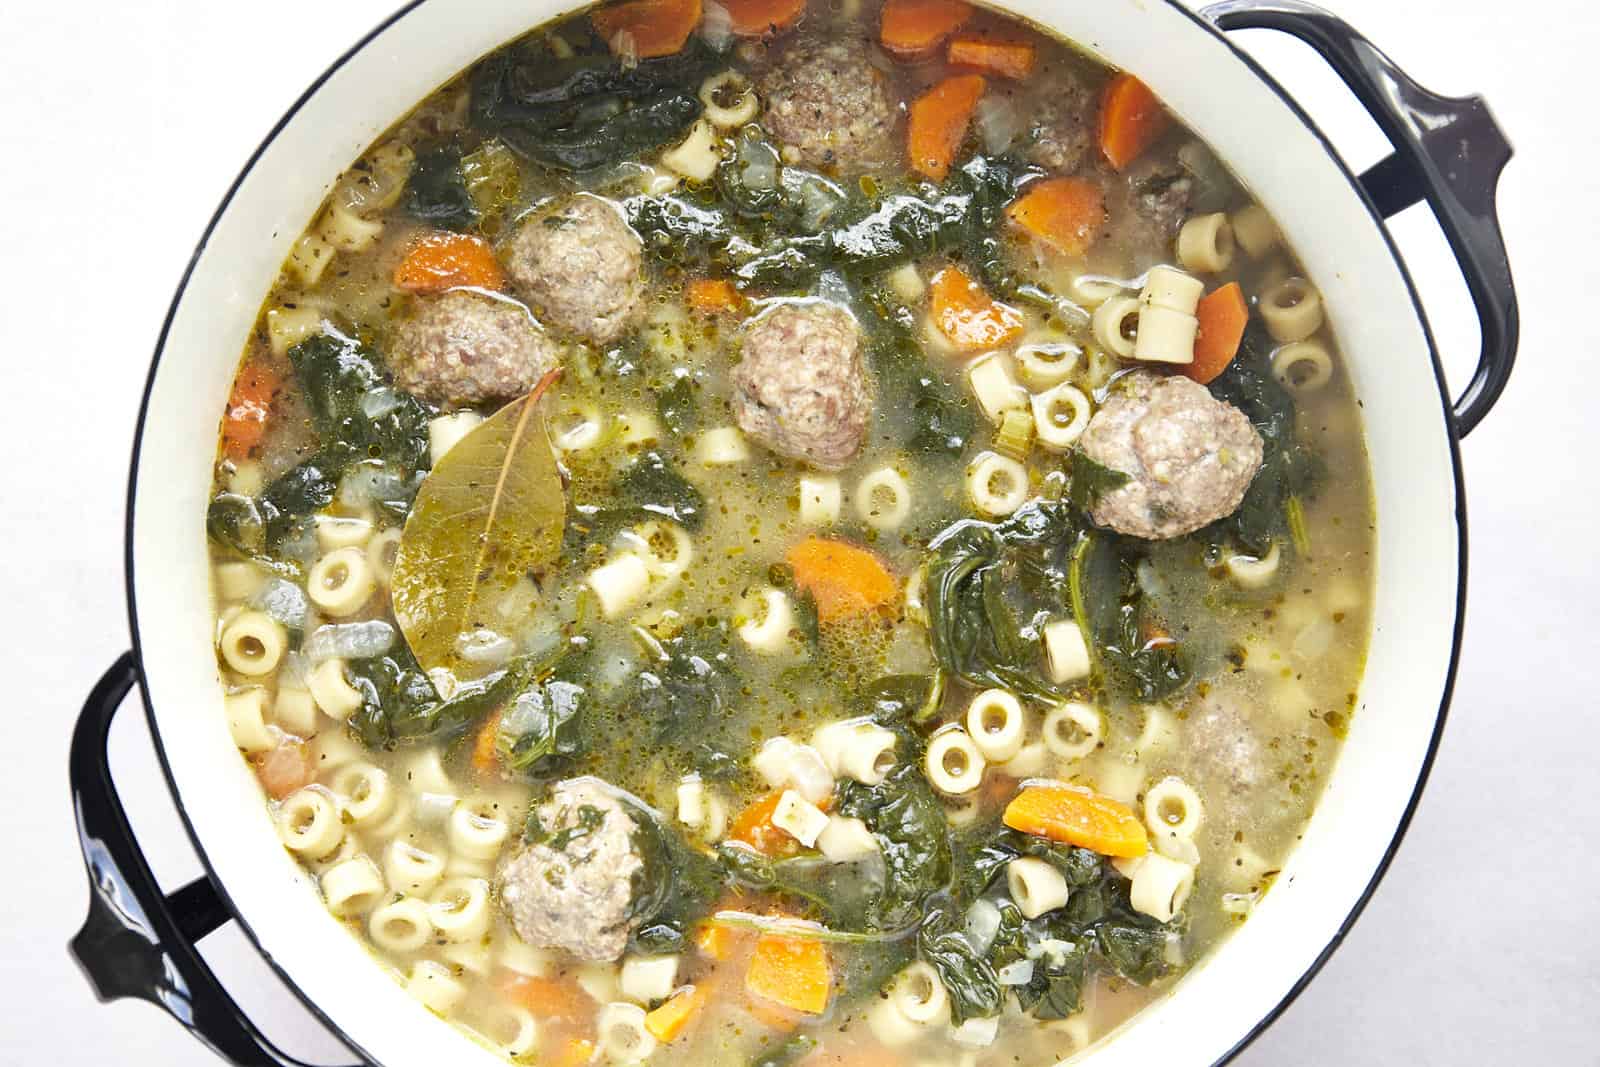 Italian Wedding Soup Recipe - Belly Full